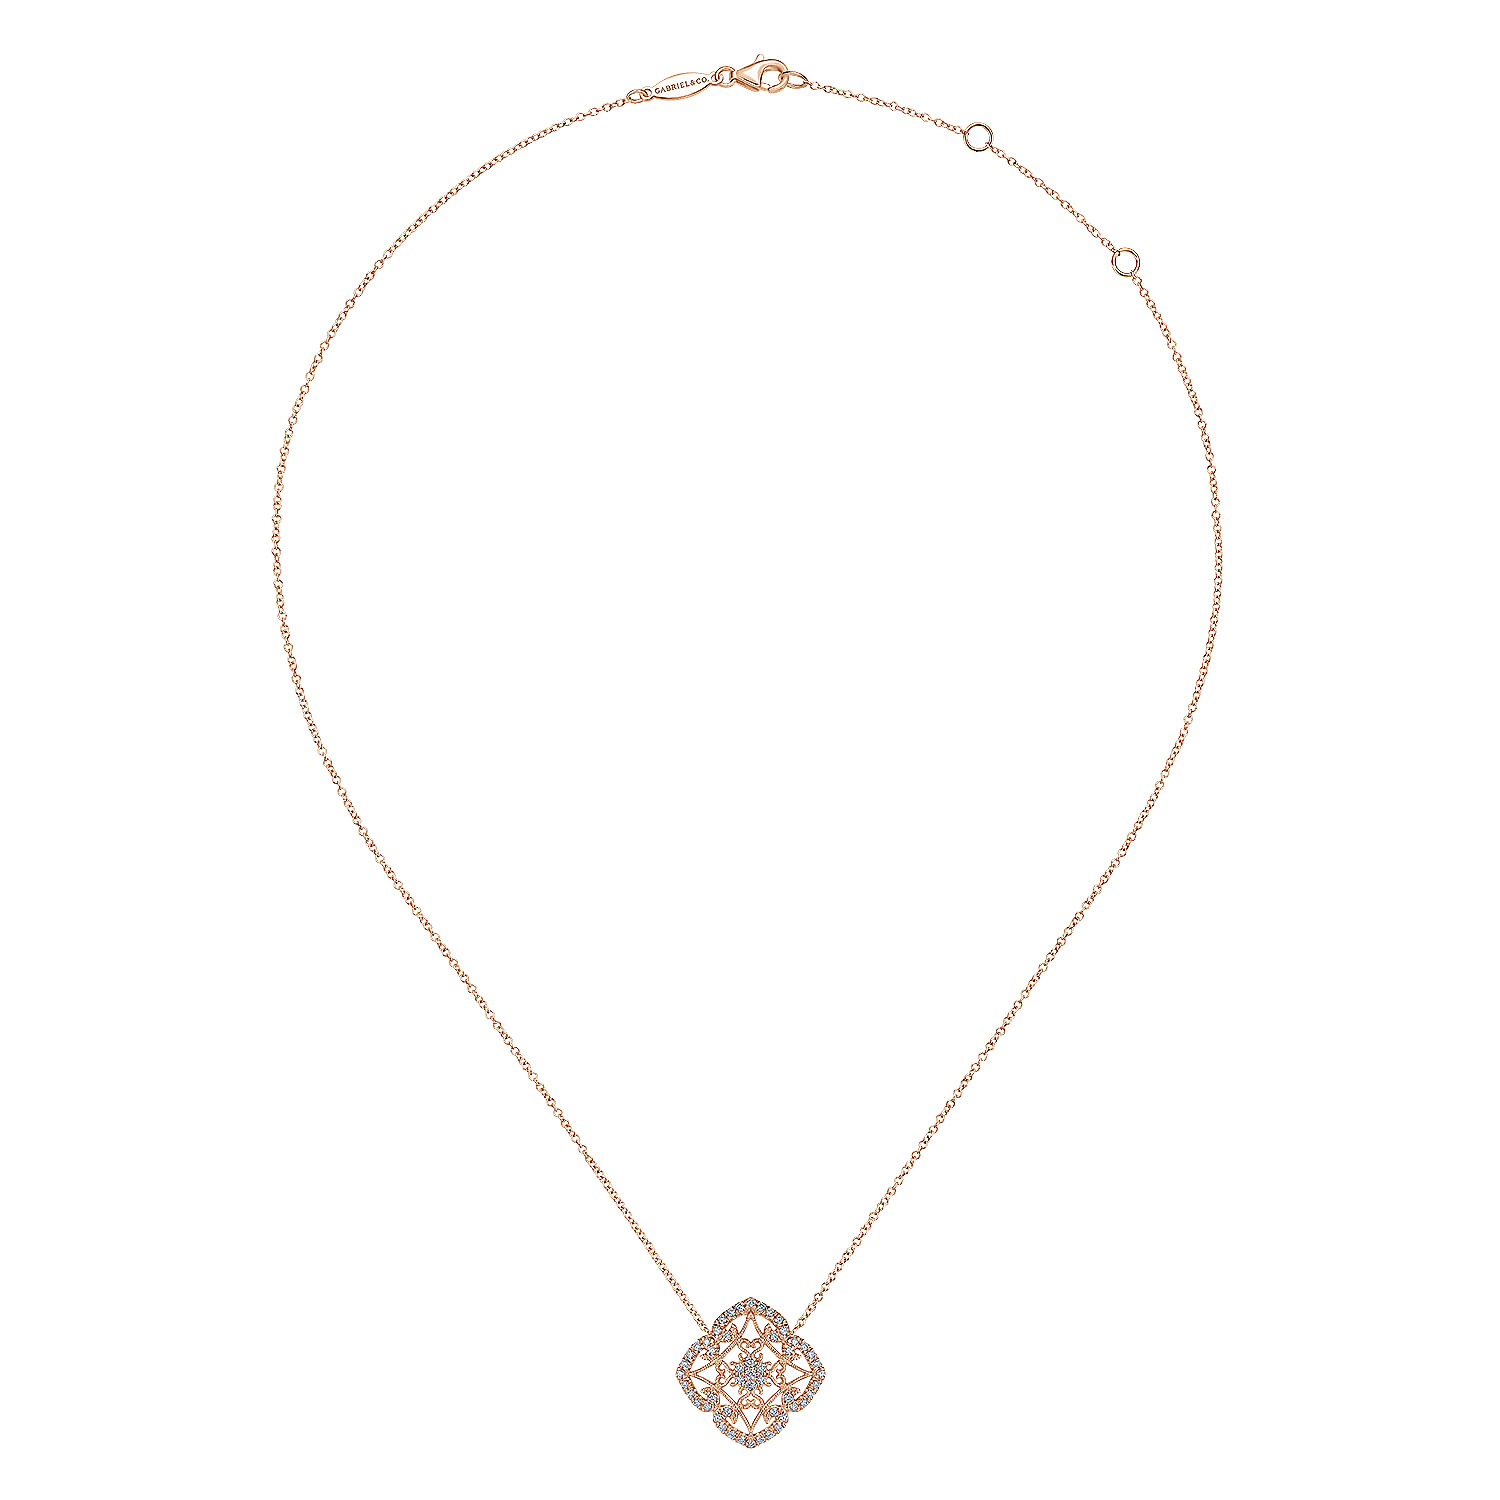 Vintage Inspired 14K Rose Gold Filigree Diamond Pendant Necklace